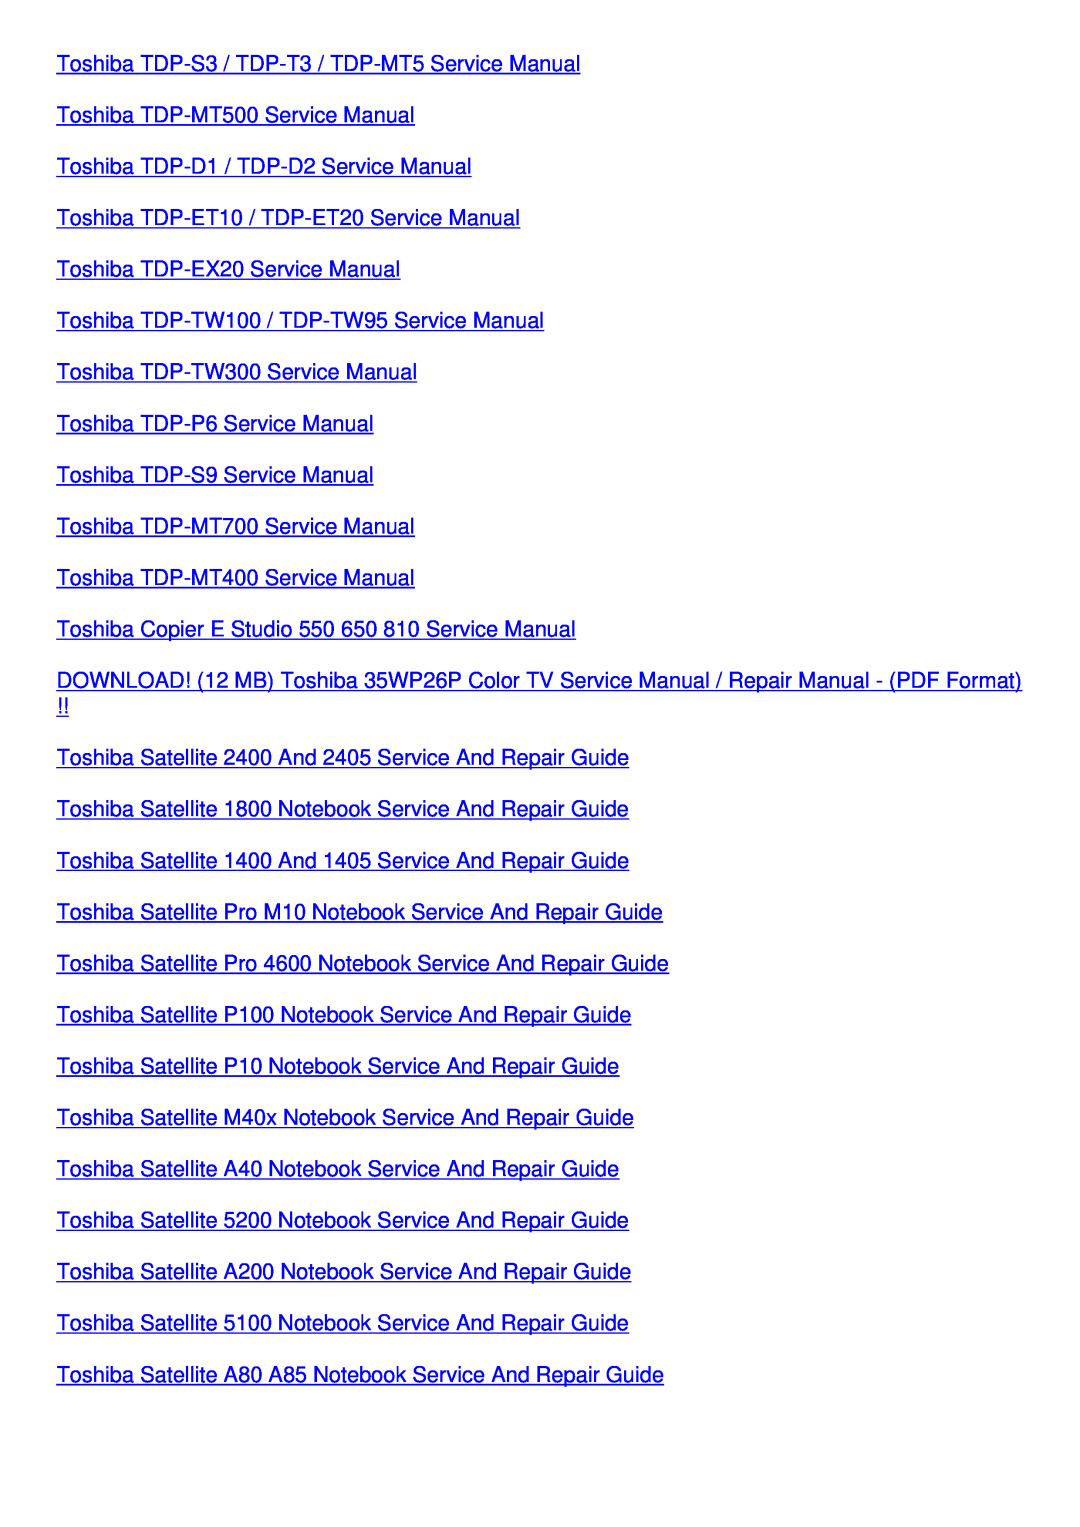 Toshiba TDP-EX20 service manual Toshiba TDP-S3 / TDP-T3 / TDP-MT5 Service Manual, Toshiba TDP-MT500 Service Manual 